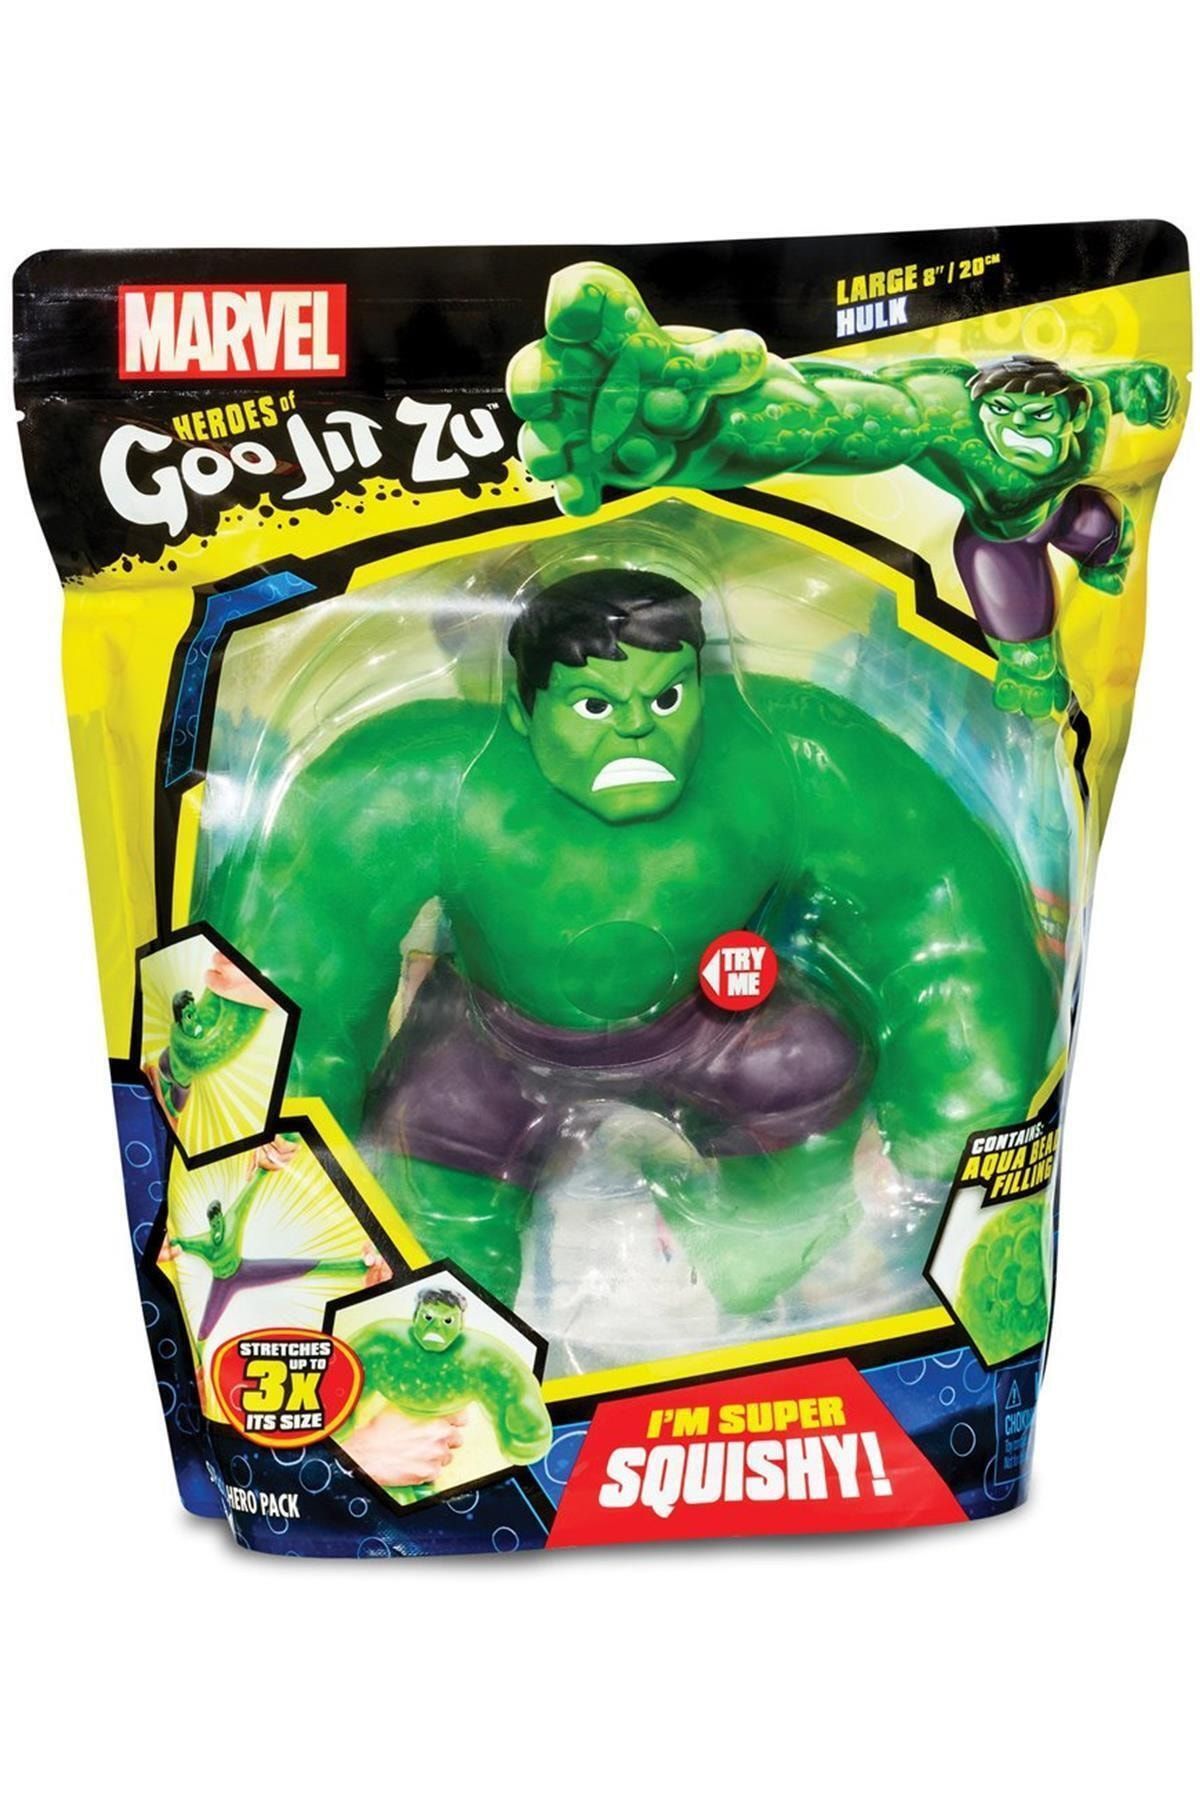 GIOCHI PREZIOSI Marka: Rennway Gjt07000 Goojitzu, Marvel - Hulk, 30 Cm, +4 Yaş Kategori: Spor Oyuncakları